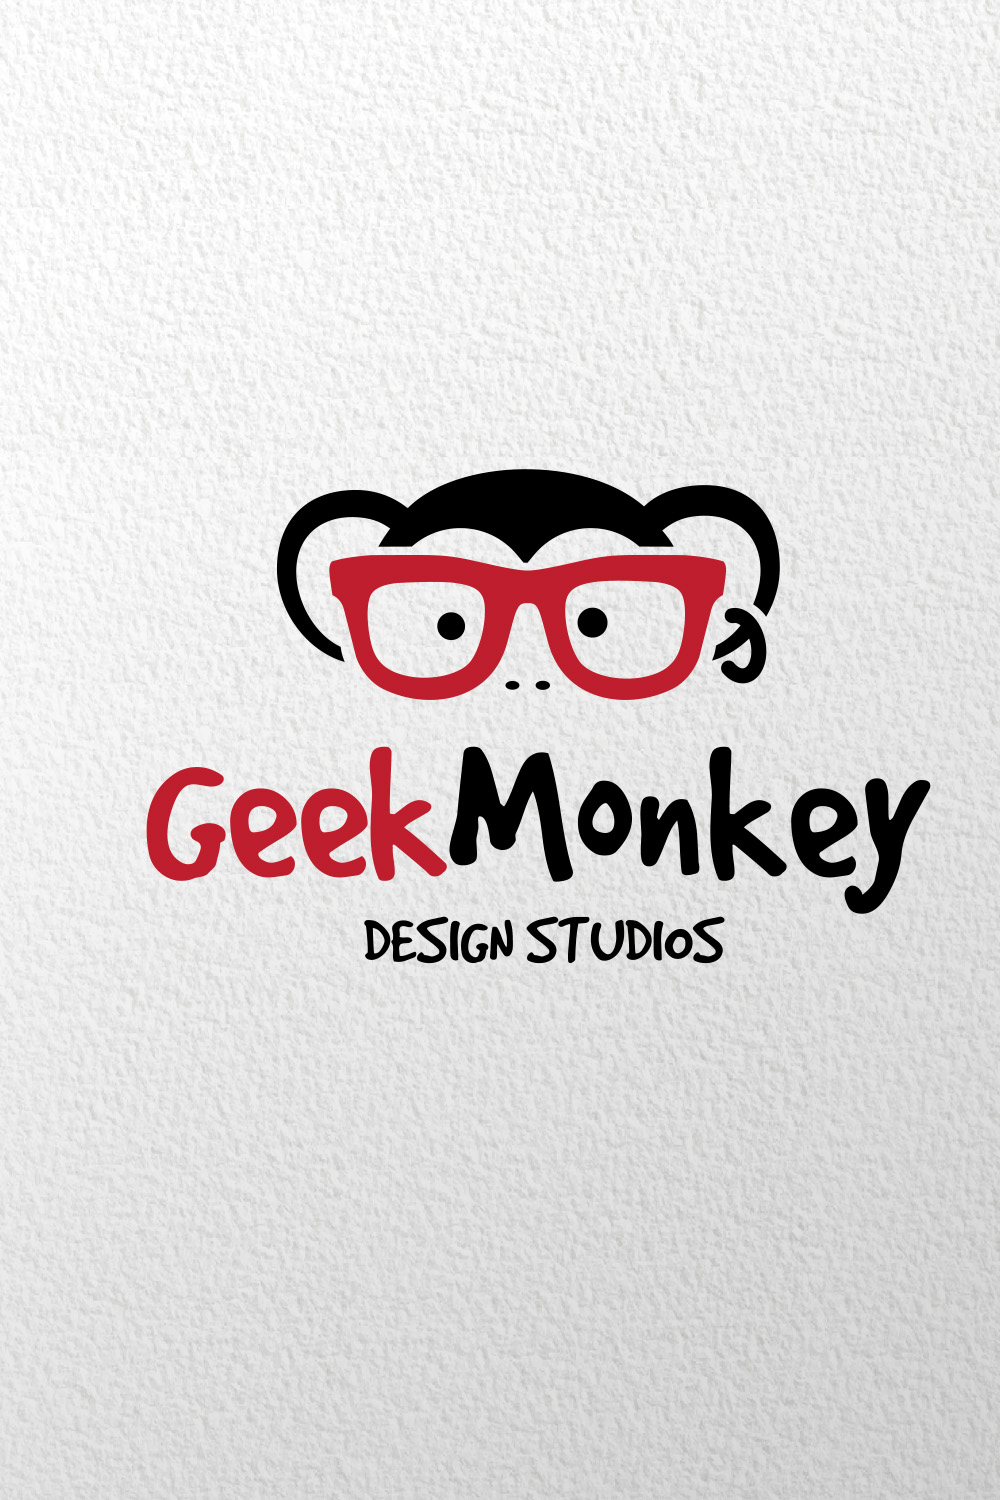 Geekmonkey logo design pinterest preview image.